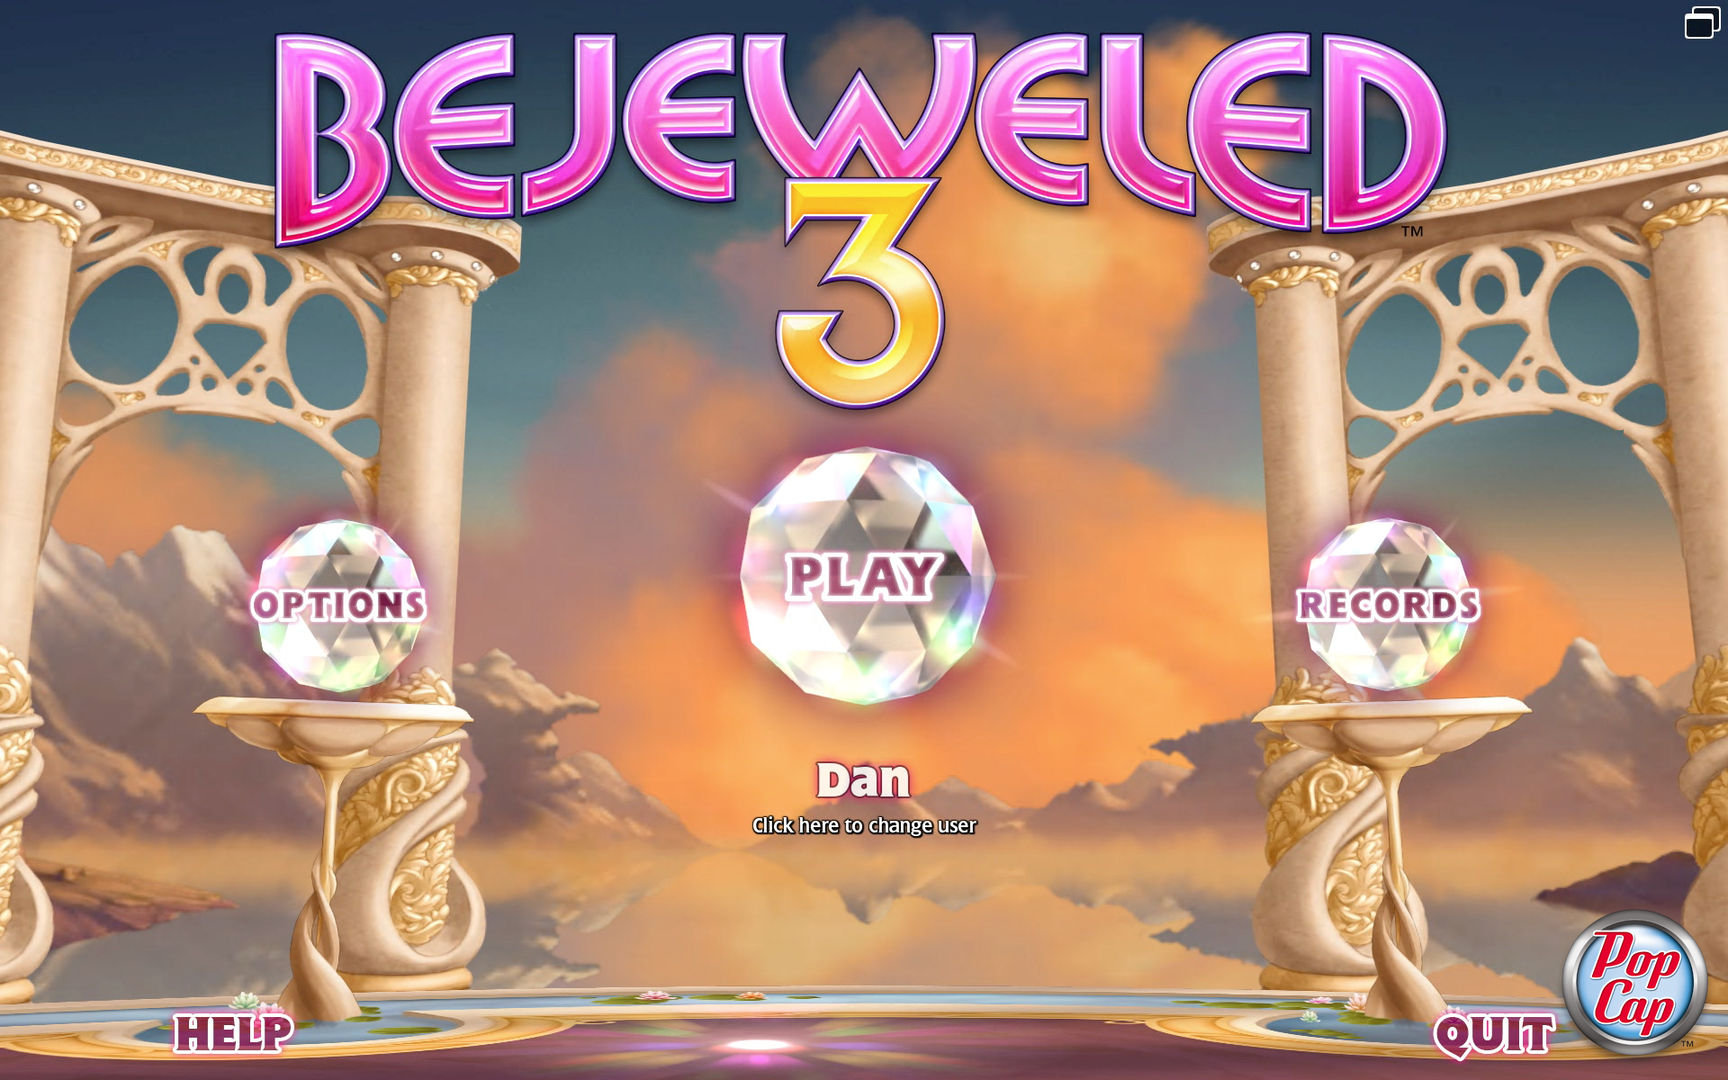 bejeweled 3 online vista not working